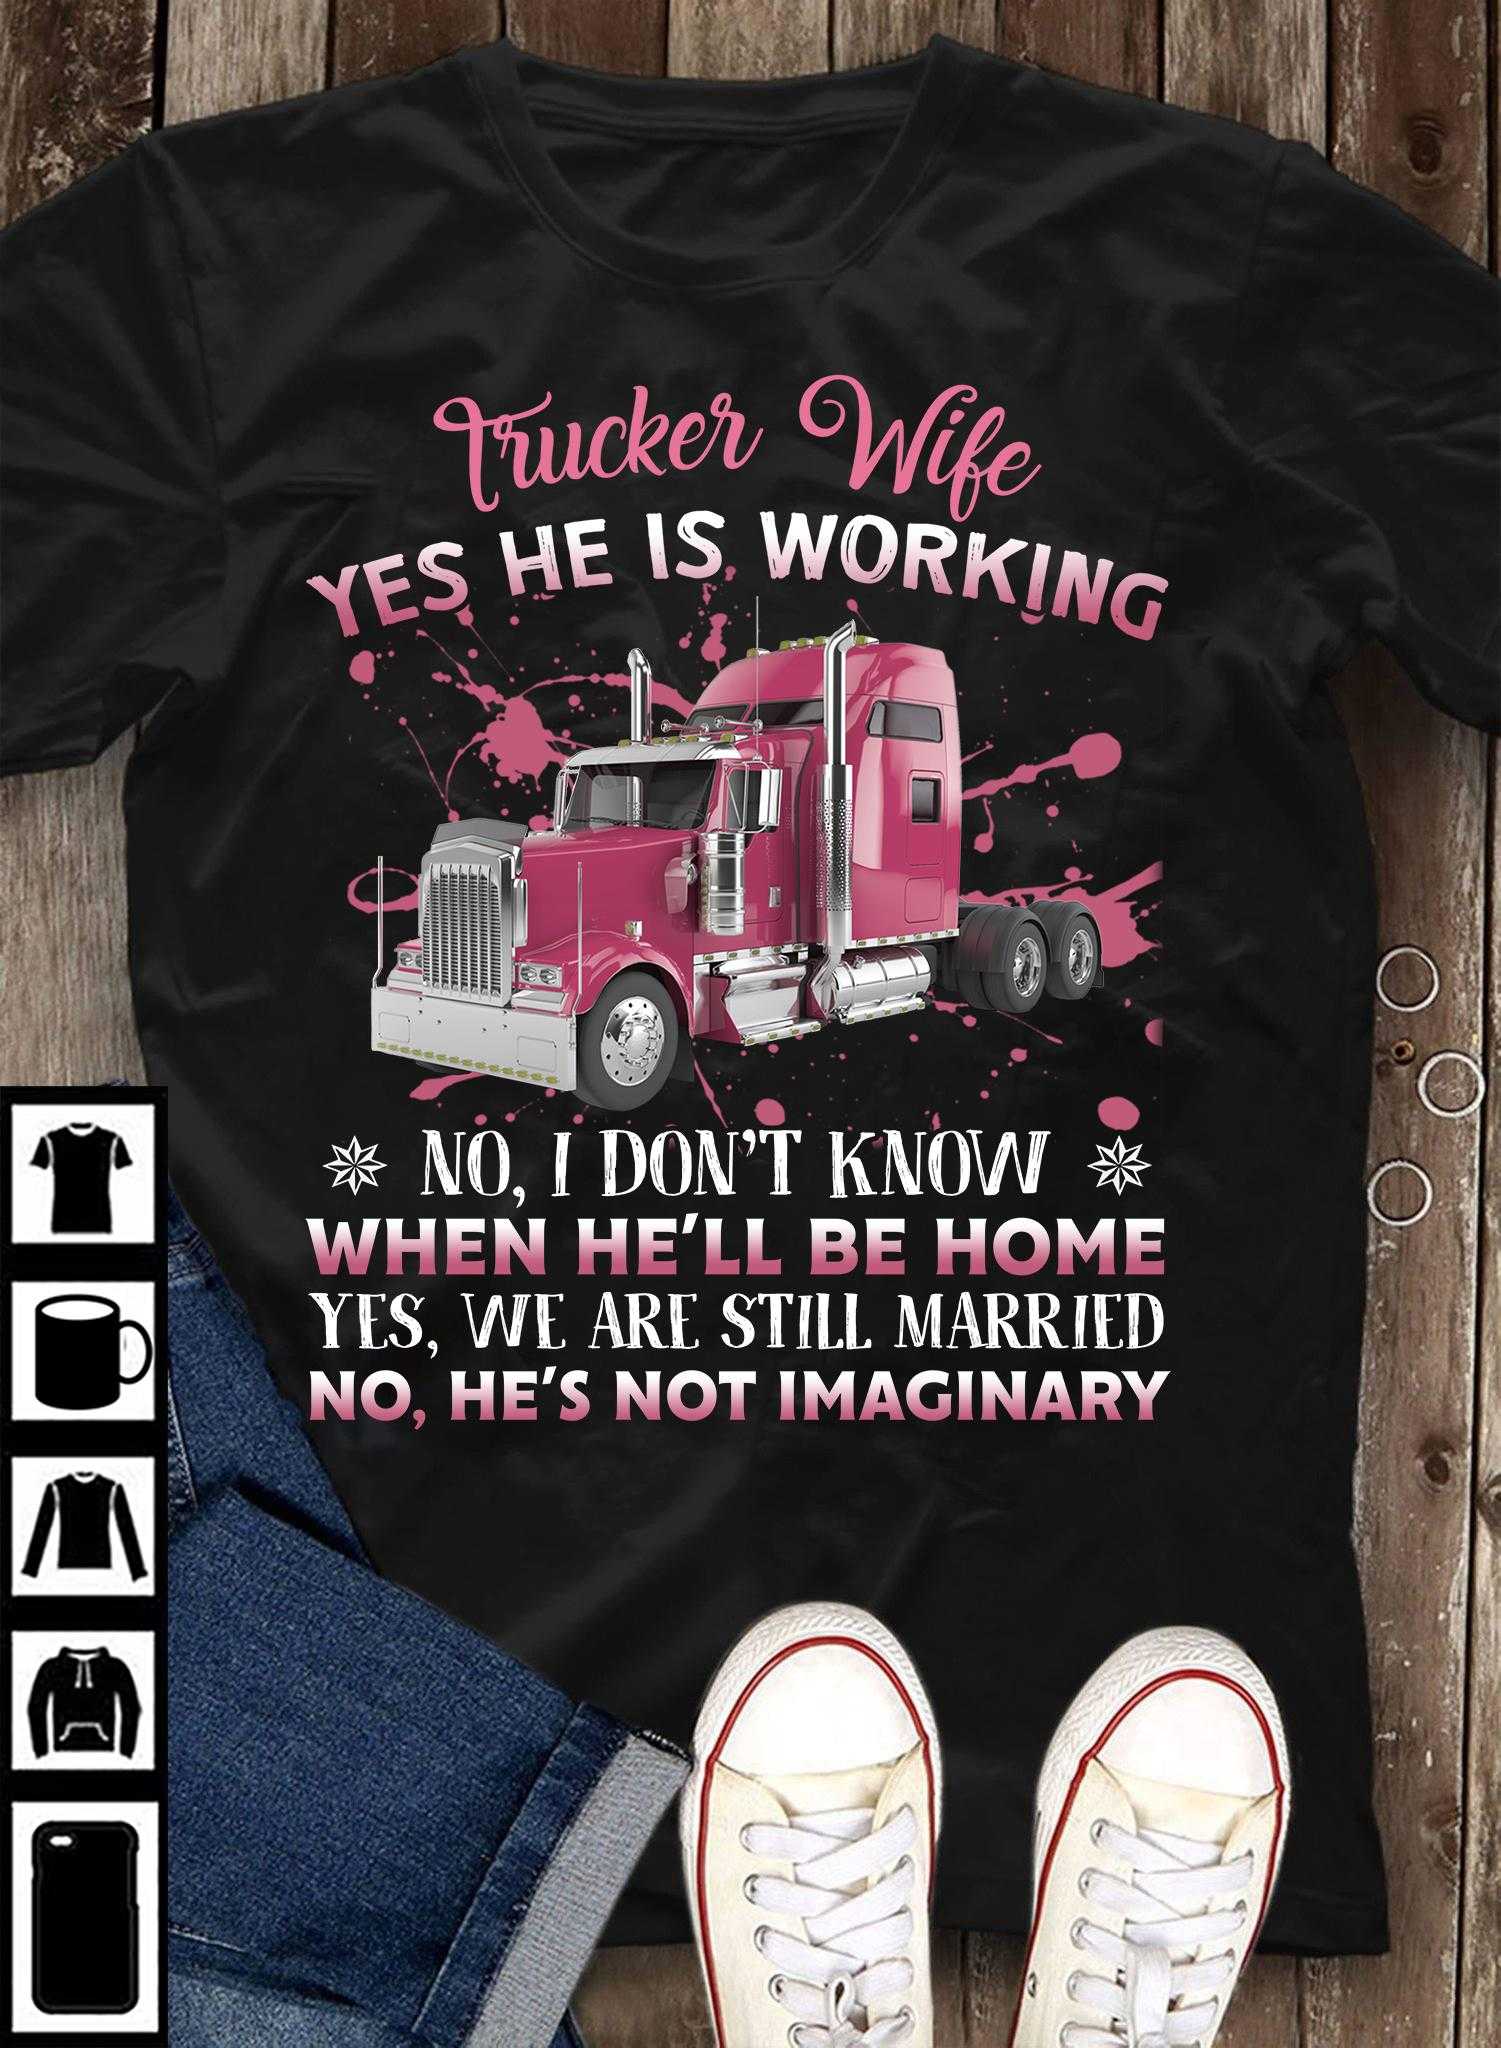 Trucker wife - Yes he is working, trucker the job, husband and wife